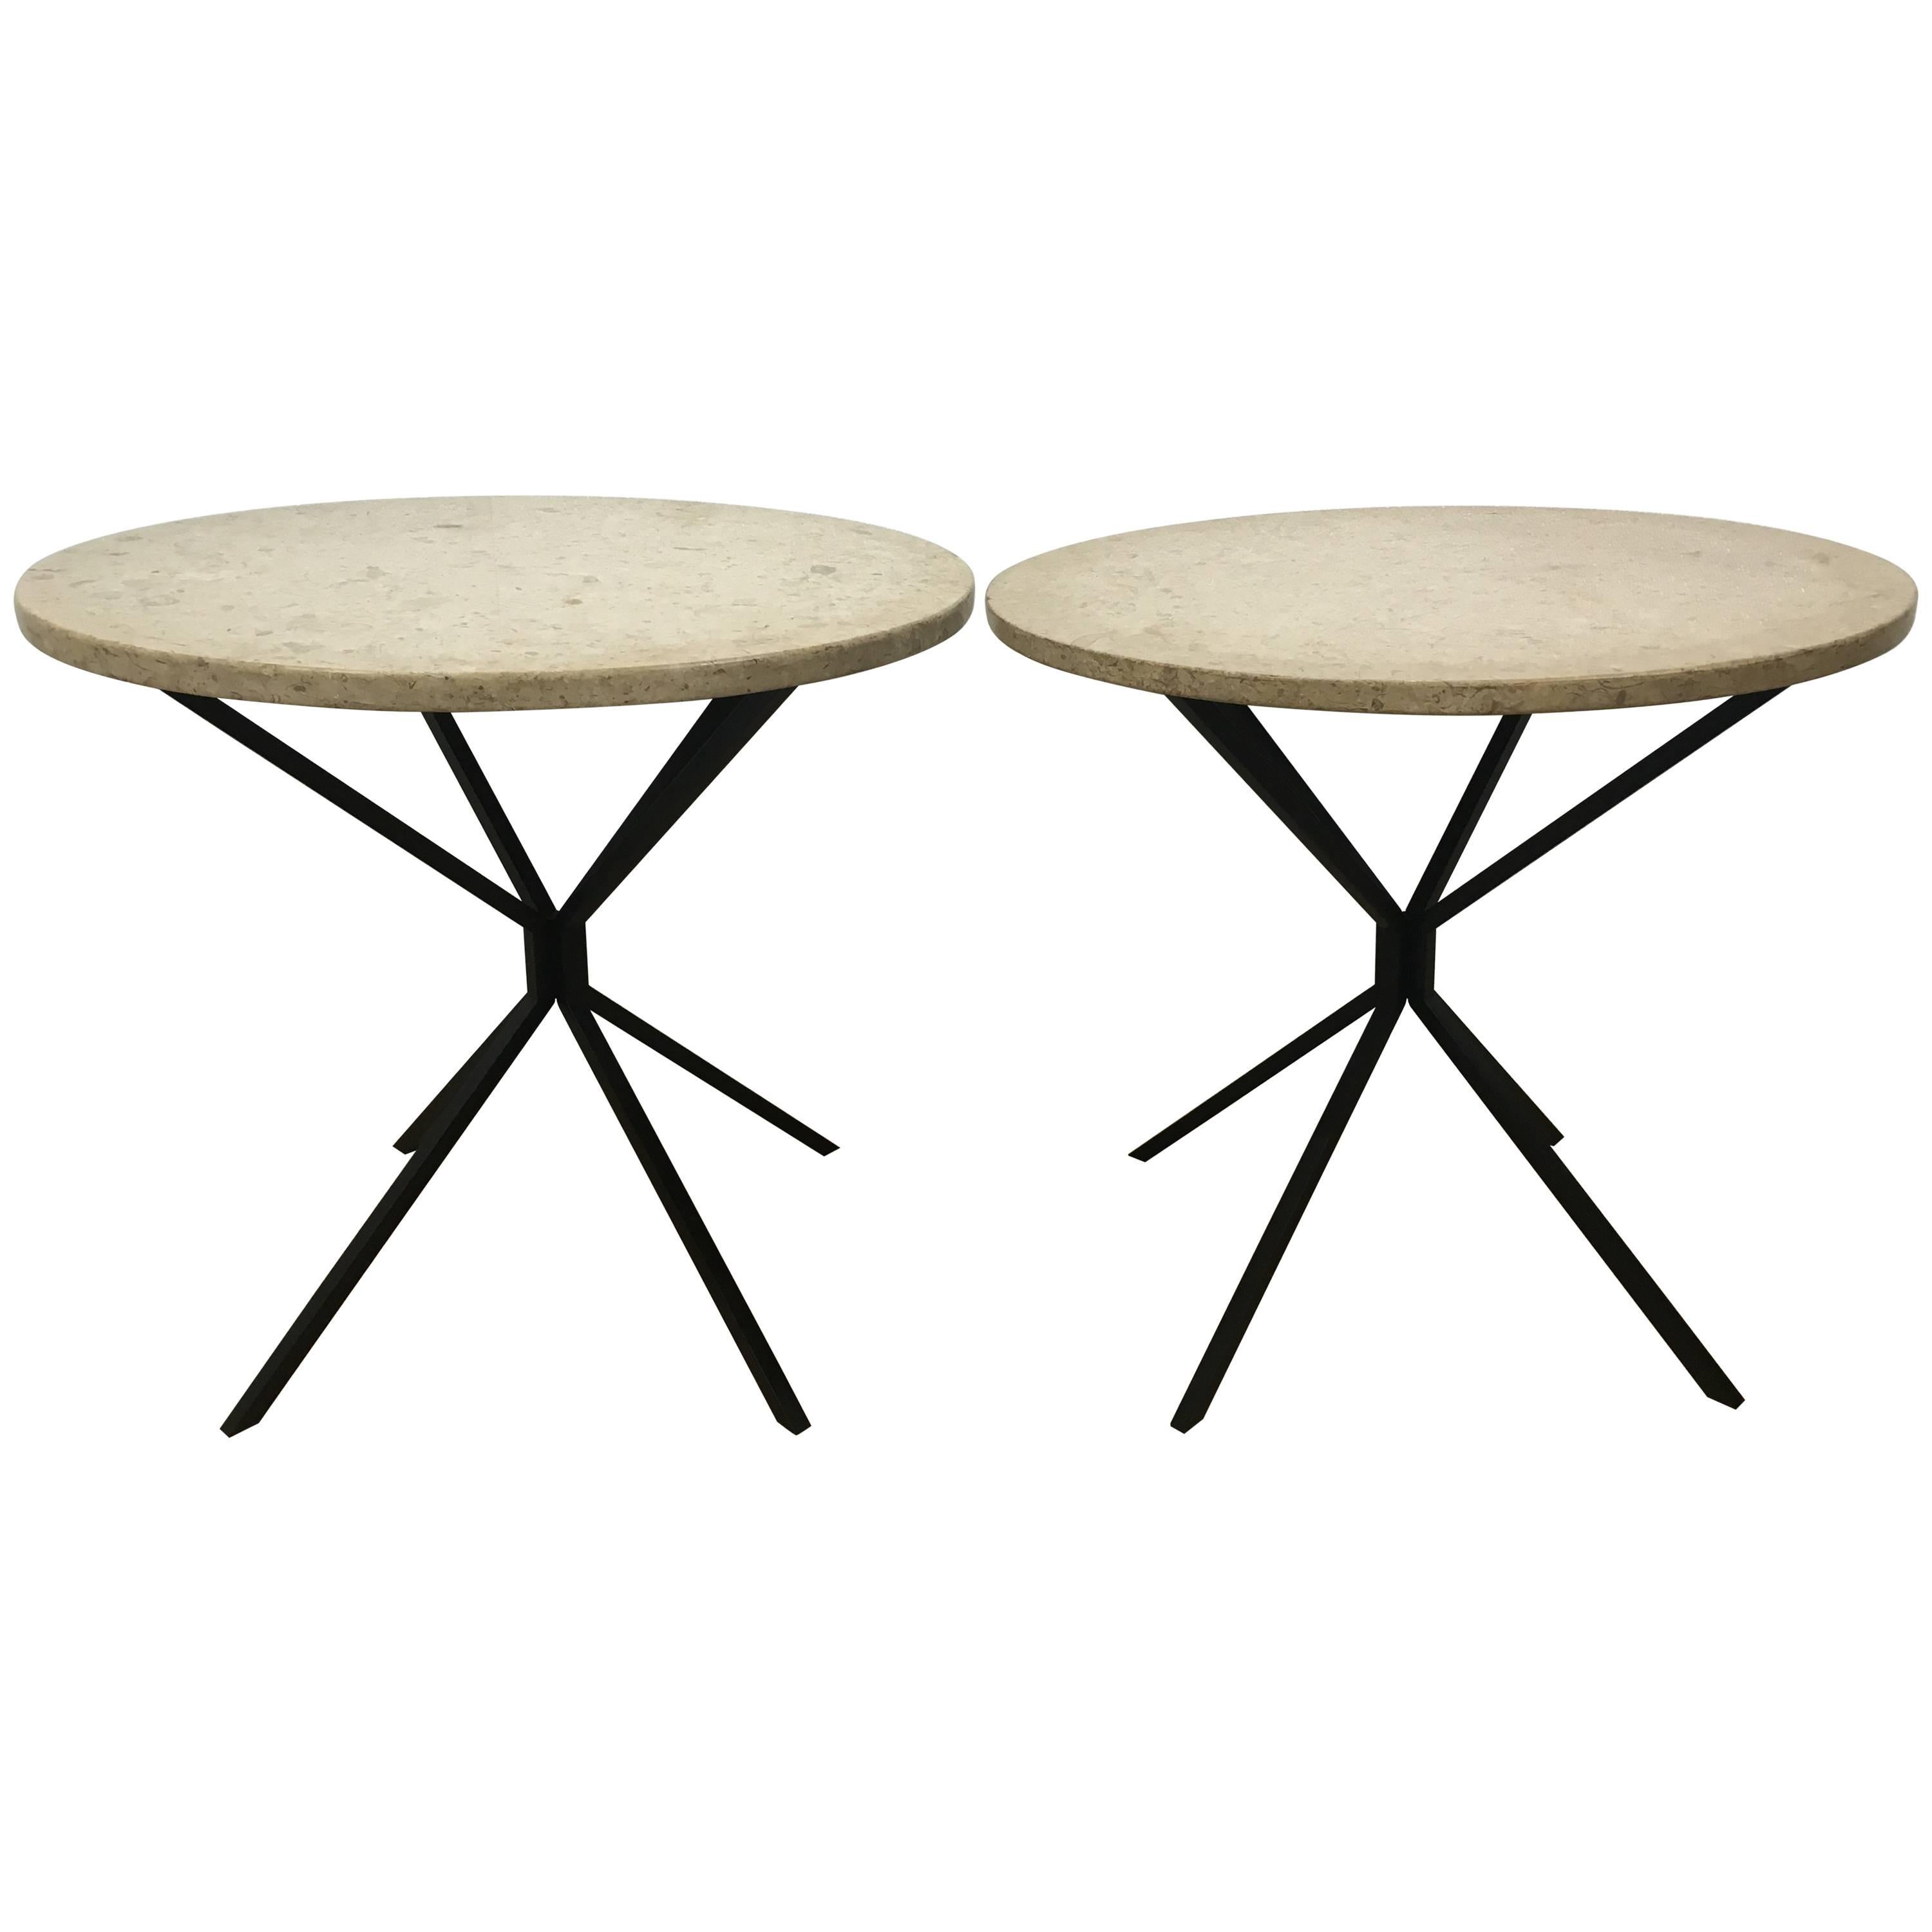 Pair of Italian Modern Travertine Top Side Tables